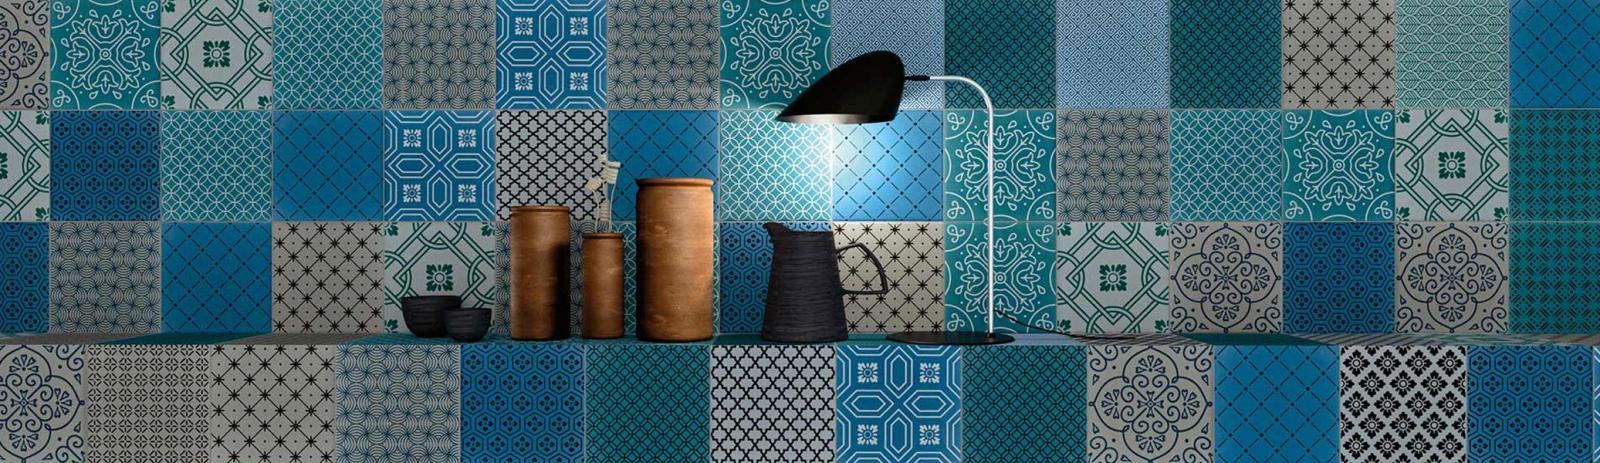 banner-terra-mia-italian-decorative-pattern-floor-wall-tile-Ornamenta-Gamma-Due-anaheim-1900x550